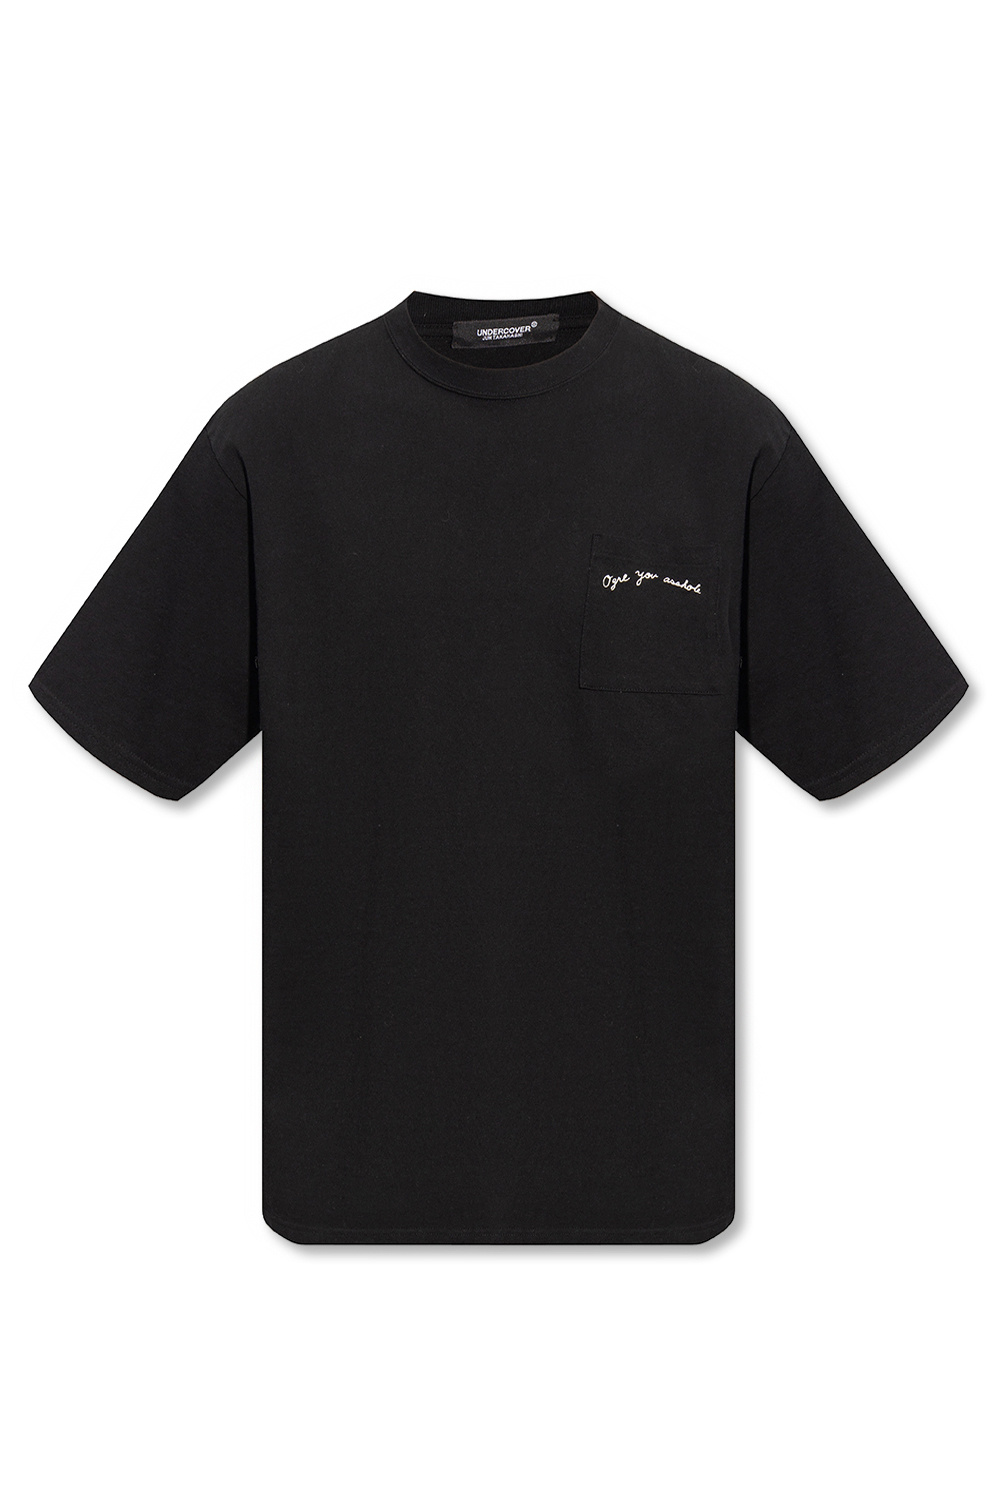 Black Printed T - IetpShops Norway - shirt Undercover - White